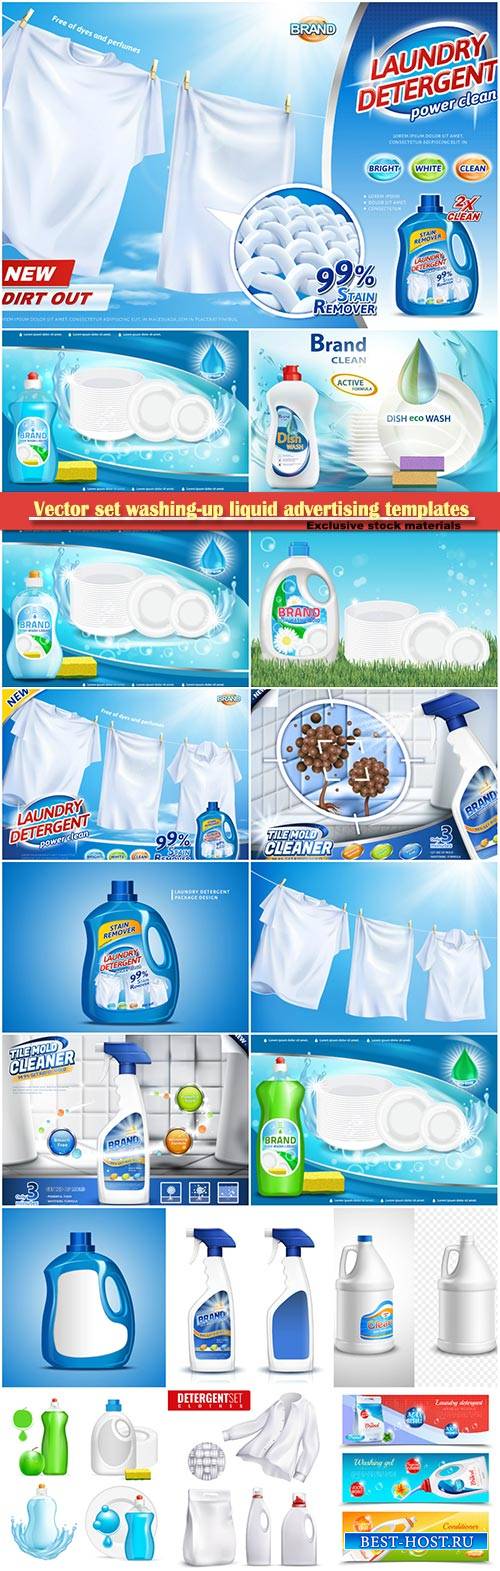 Vector set washing-up liquid advertising templates